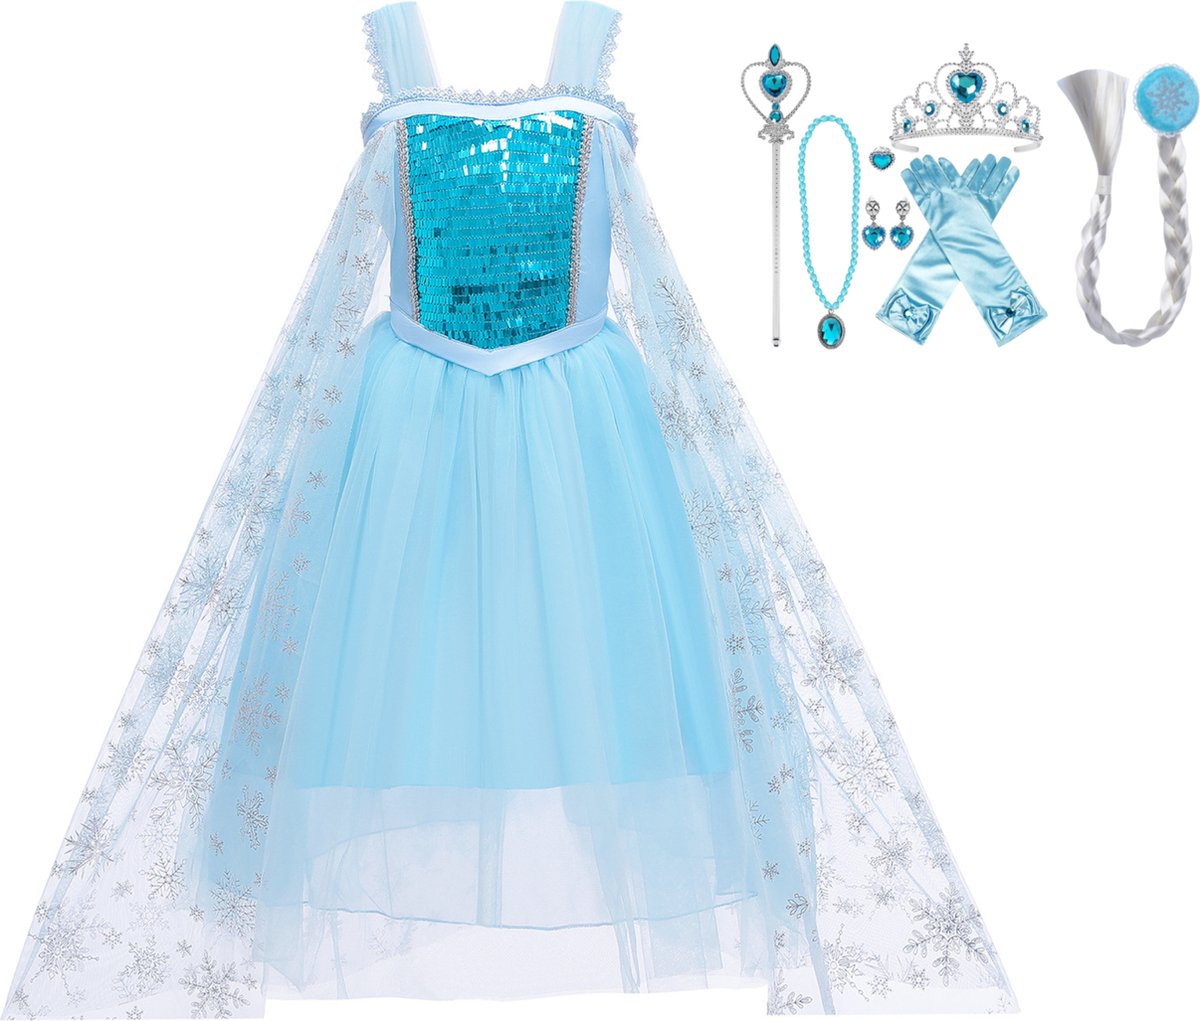 Joya Kids® Blauwe Prinsessenjurk meisje | Luxe Verkleedjurk + Accessoires set | Verkleedkleding | Prinsessen speelgoed | Carnaval | Cadeau Meisje Sinterklaas | Maat 110-116 (120)